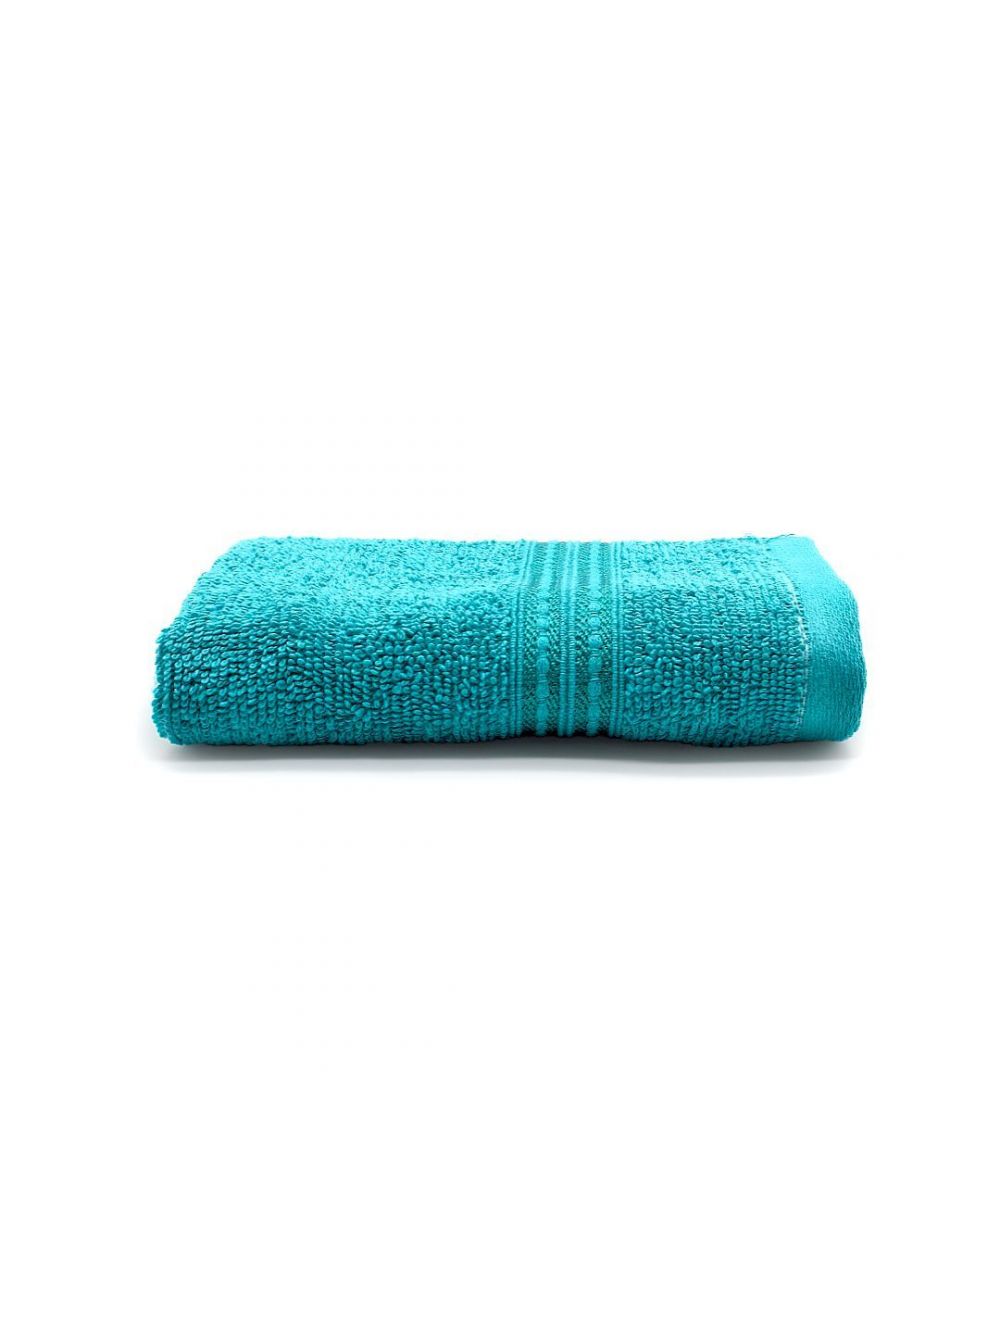 Rahalife 100% Cotton Face Towel, Classic Collection, Sky Blue Colour   -14RLFT029